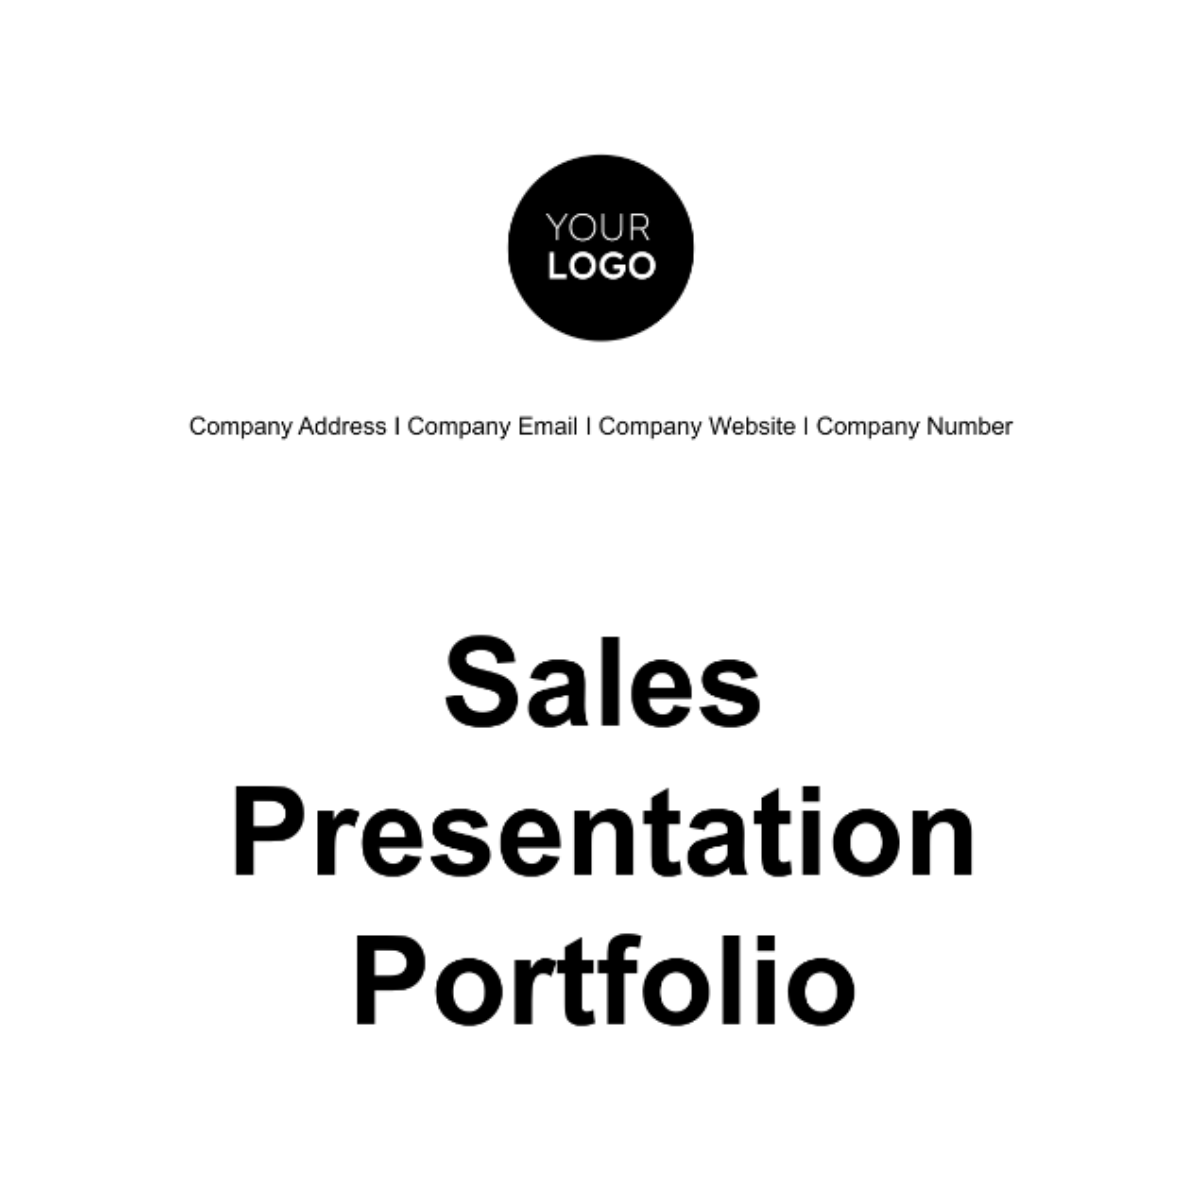 Sales Presentation Portfolio Template